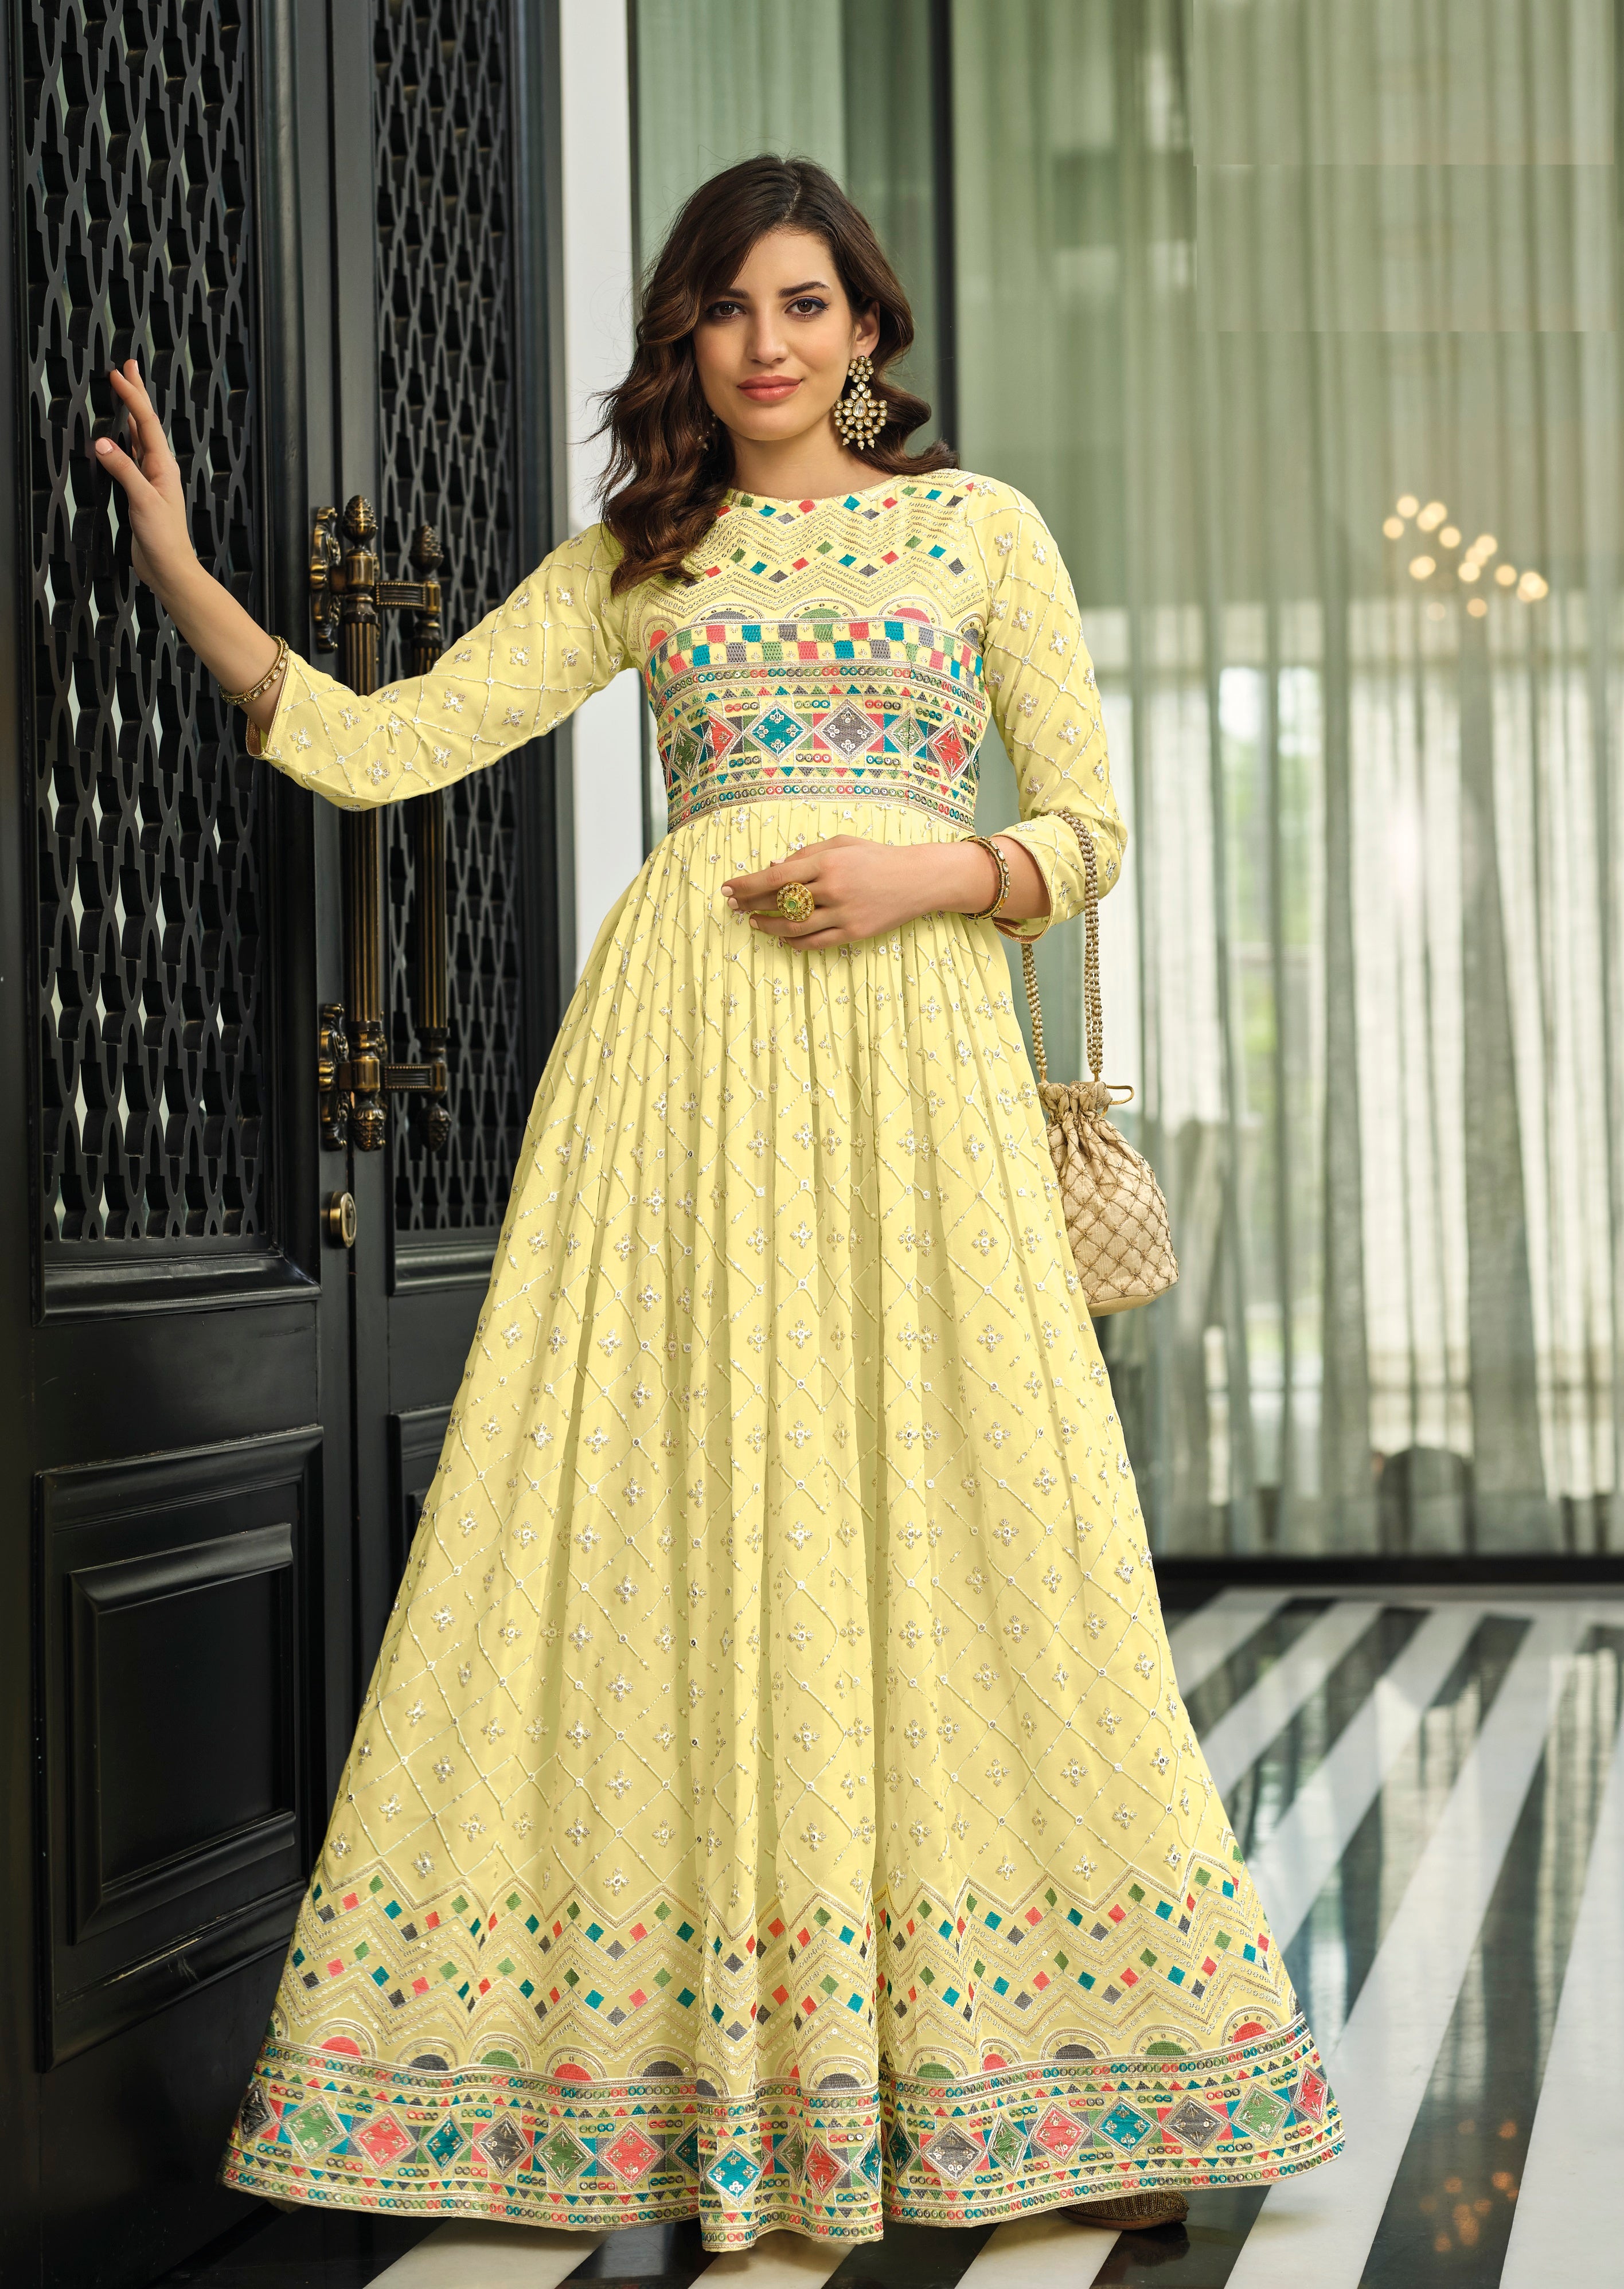 Indian Pakistani Heavy Salwar Kameez Suit Party Wear Dress Bollywood Ethnic  Gown | eBay